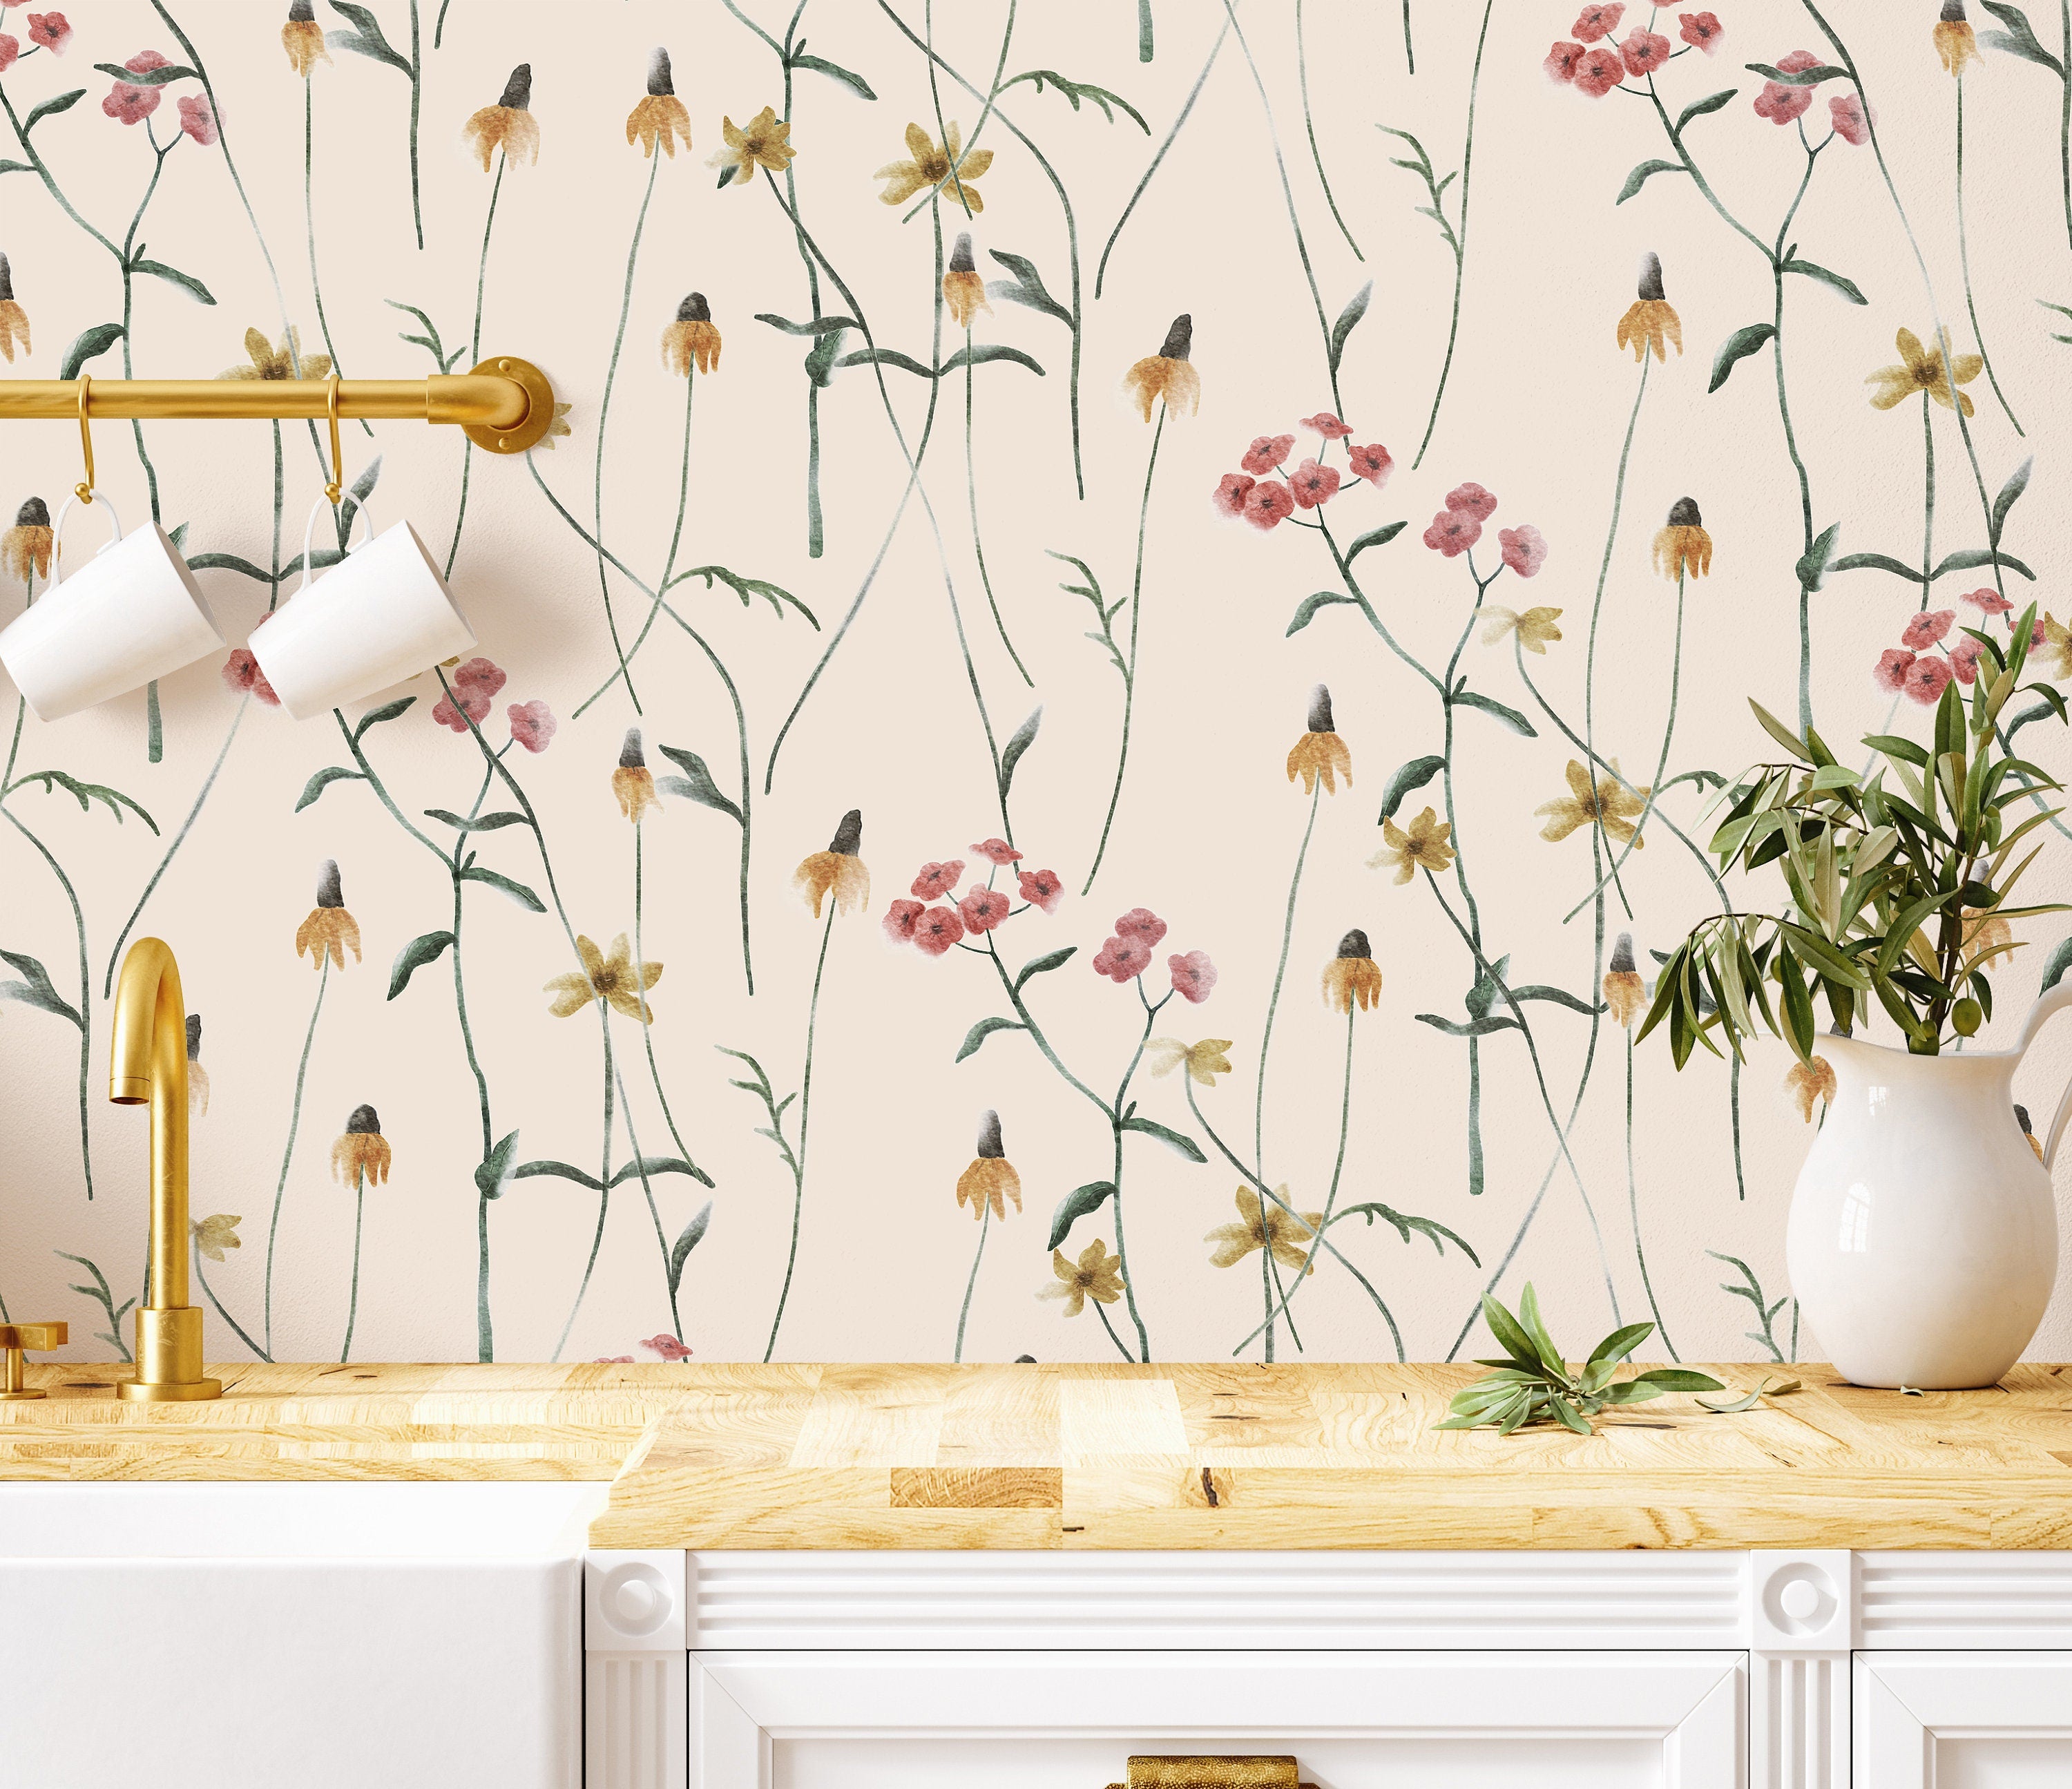 Daisy Wildflowers Wallpaper | Wallpaper Peel and Stick | Removable Wallpaper | Wall Paper Peel And Stick | Wall Mural | Wall Decor 3415 - JamesAndColors